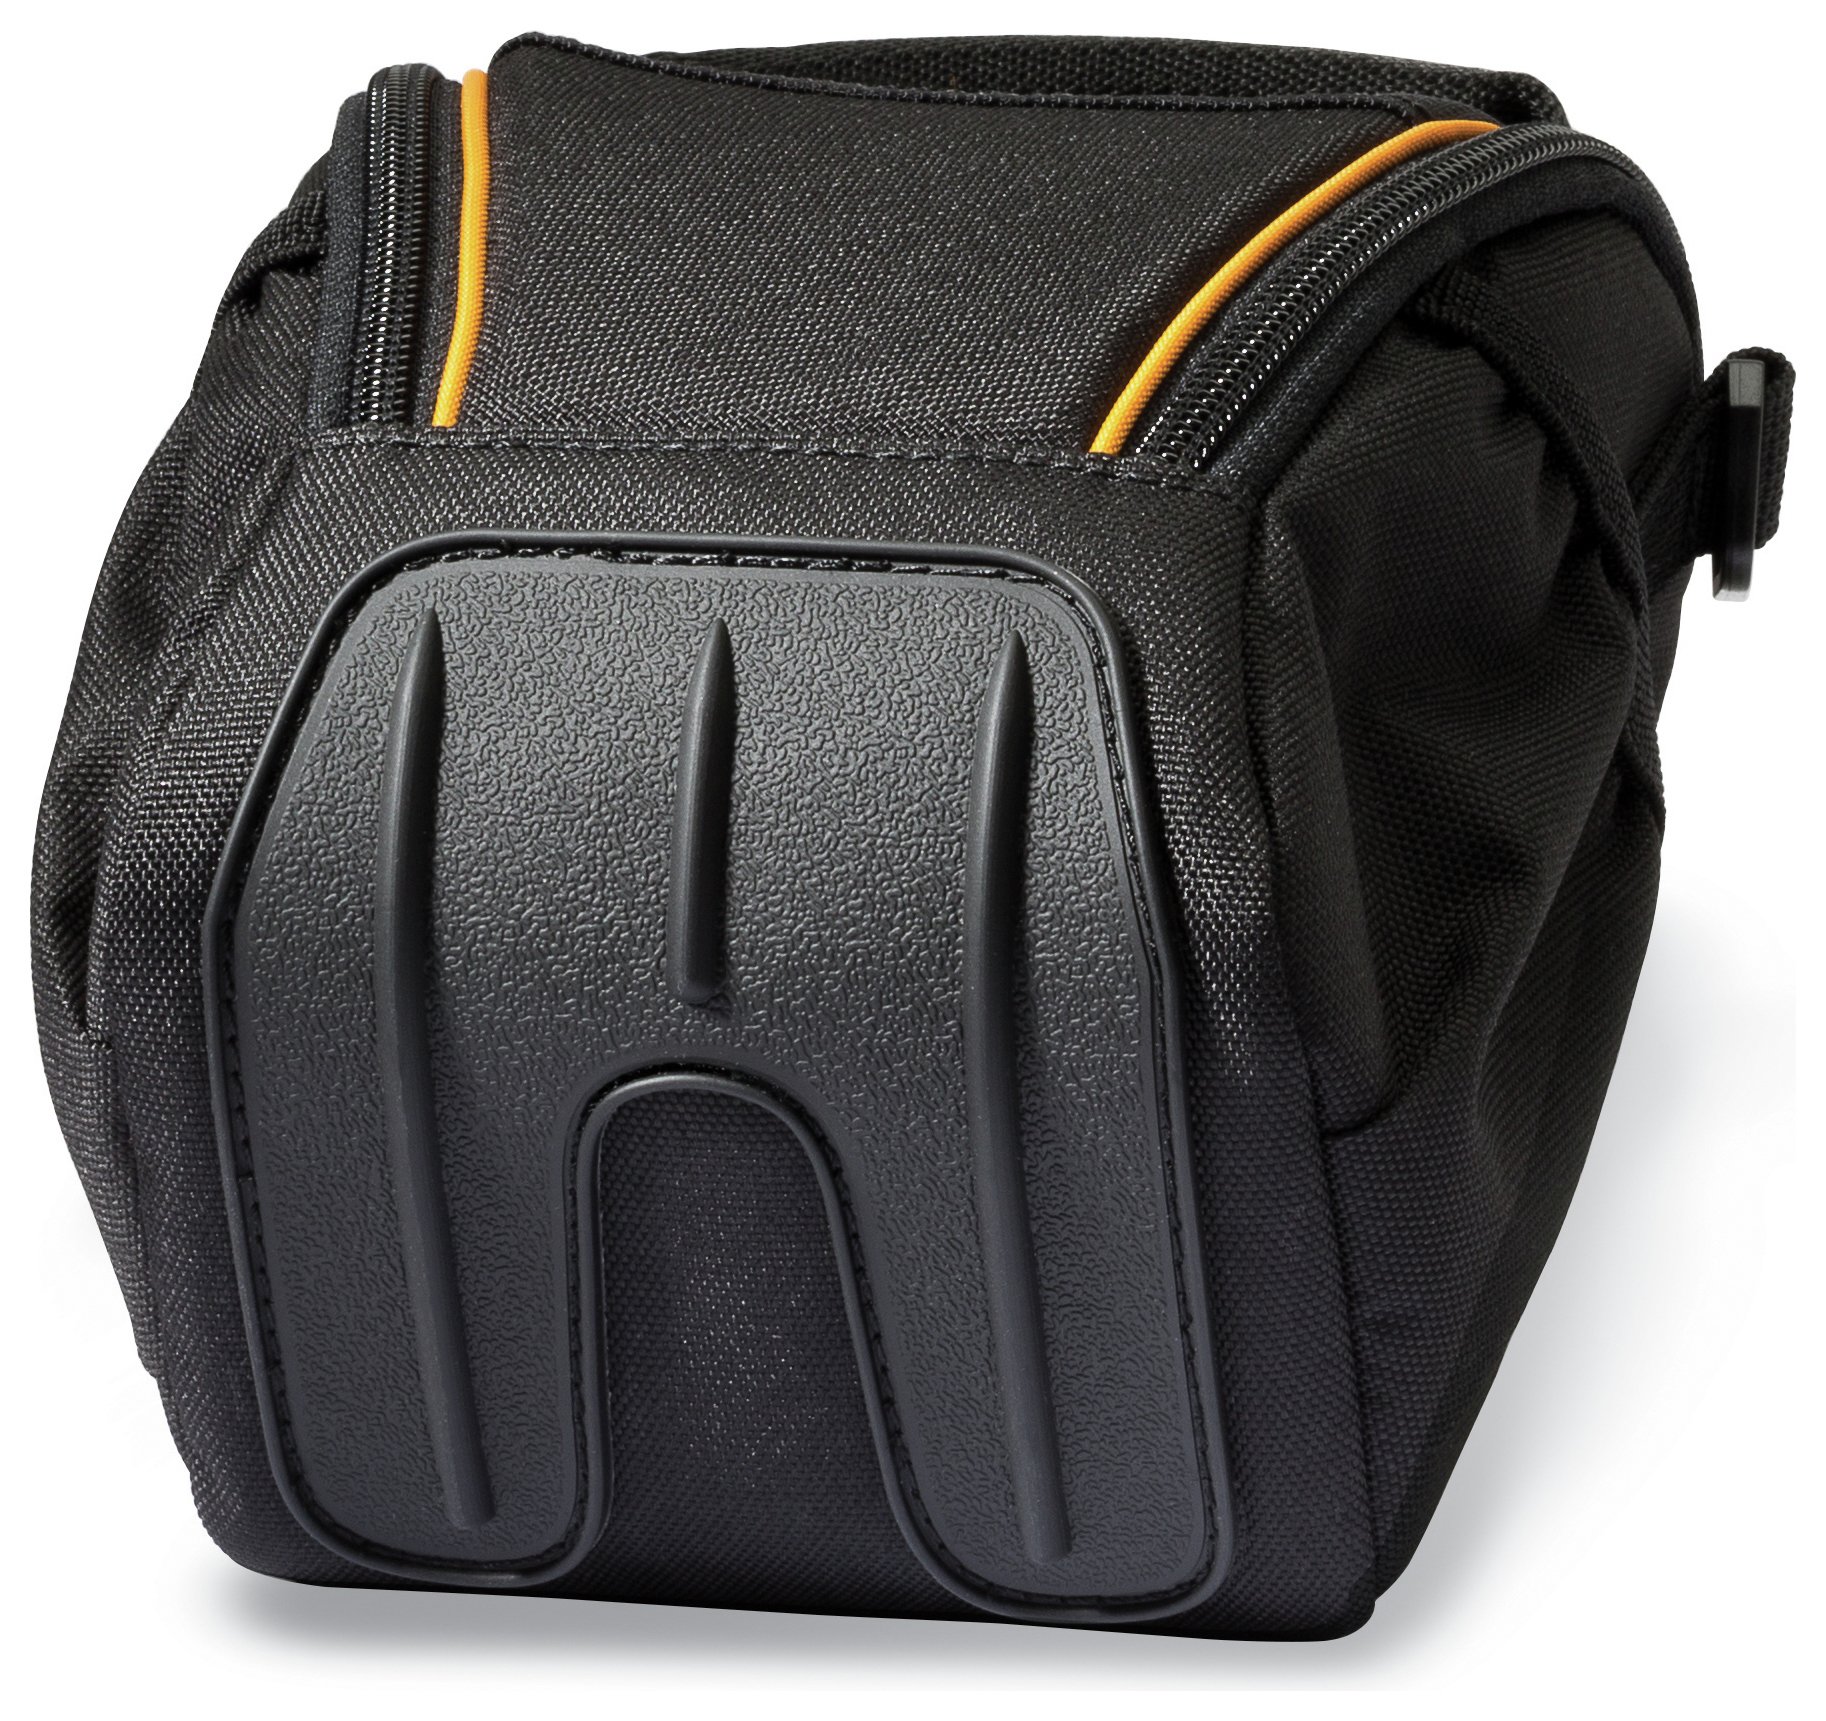 Lowepro Adventura SH100 LL Compact System Camera Bag Review